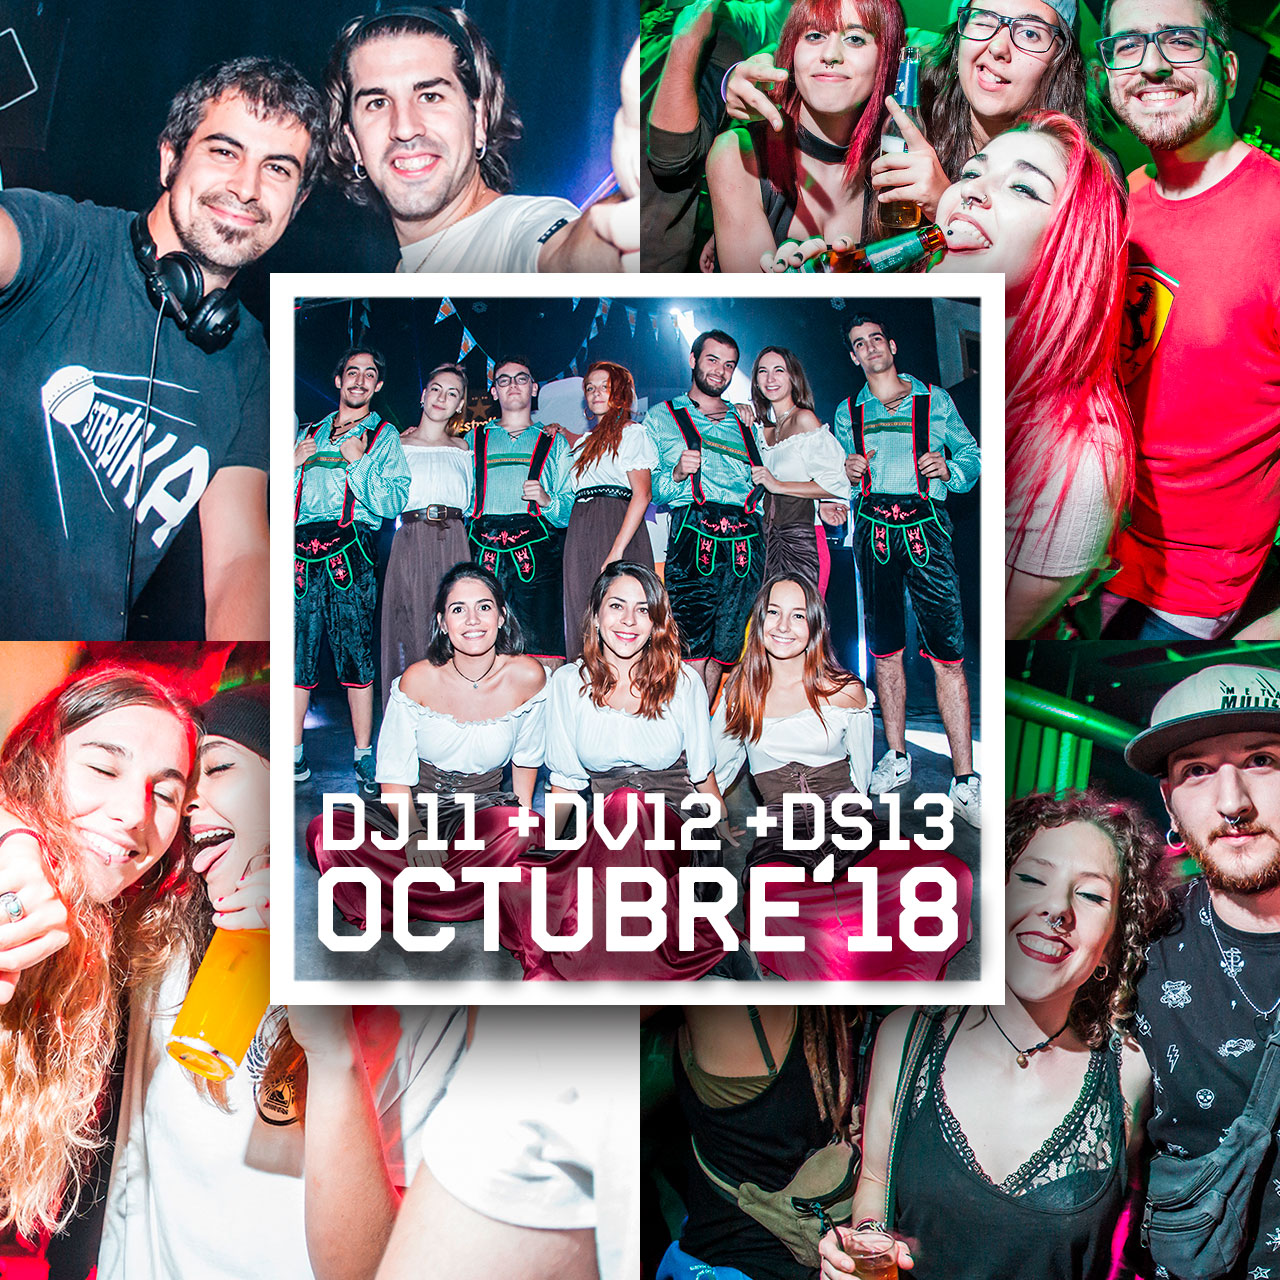 DJ11 + DV12 + DS13 OCT'18 // STROIKA SESSIONS + OCTOBER FEST